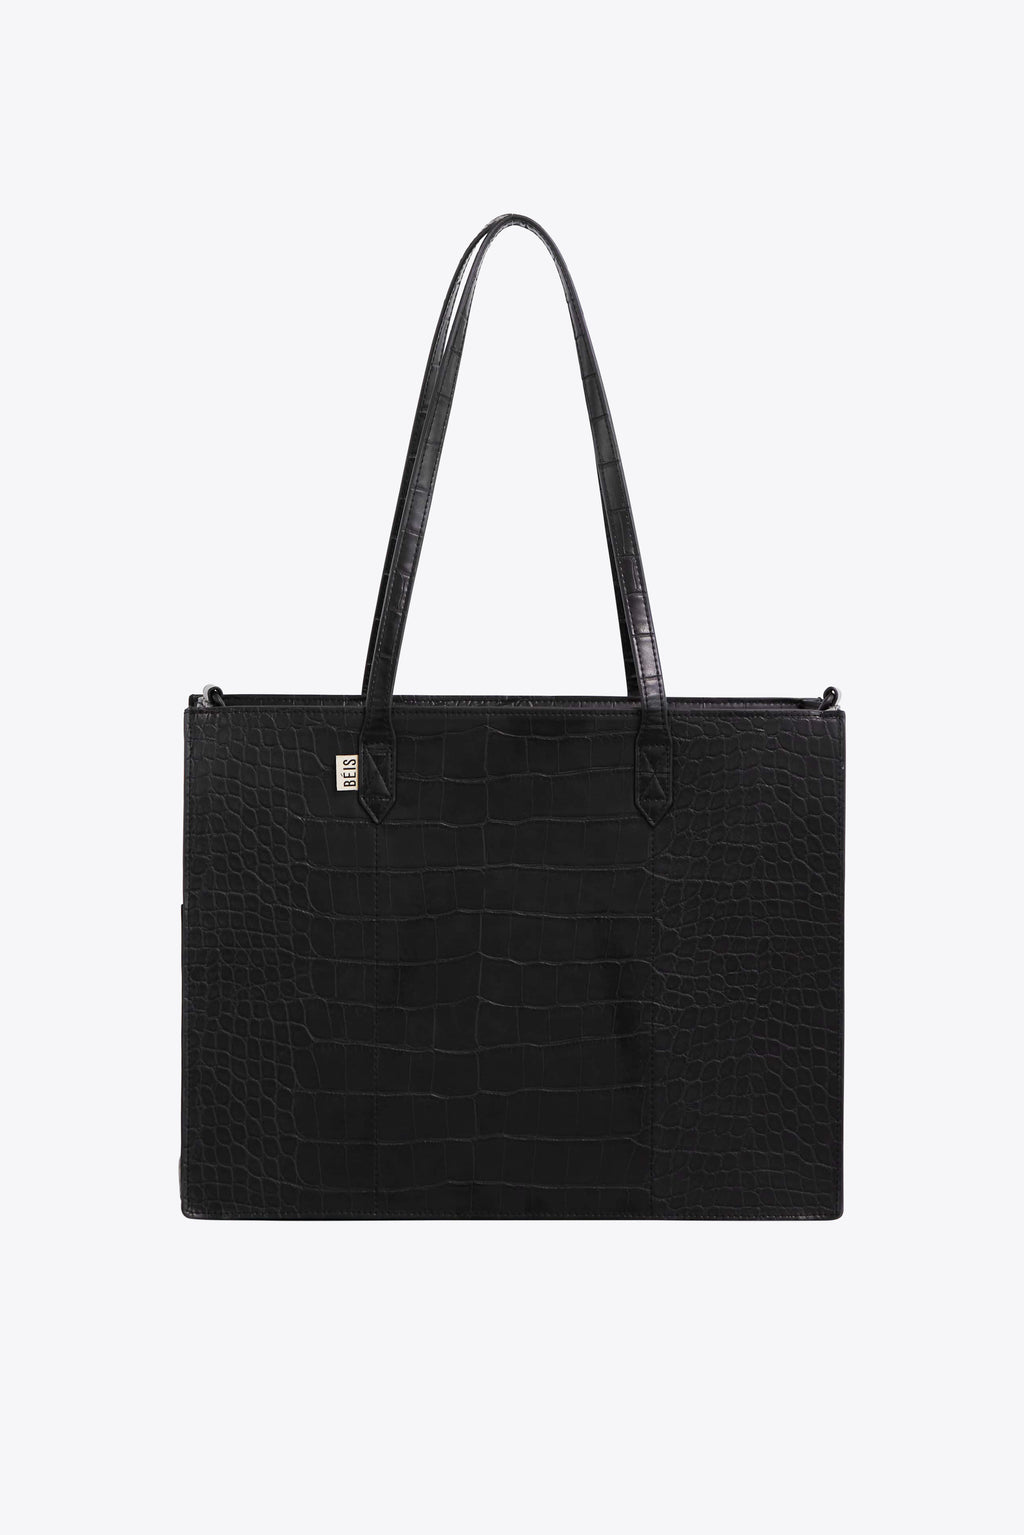 Béis 'The Work Tote' in Black Croc - Designer Laptop Bag for Women